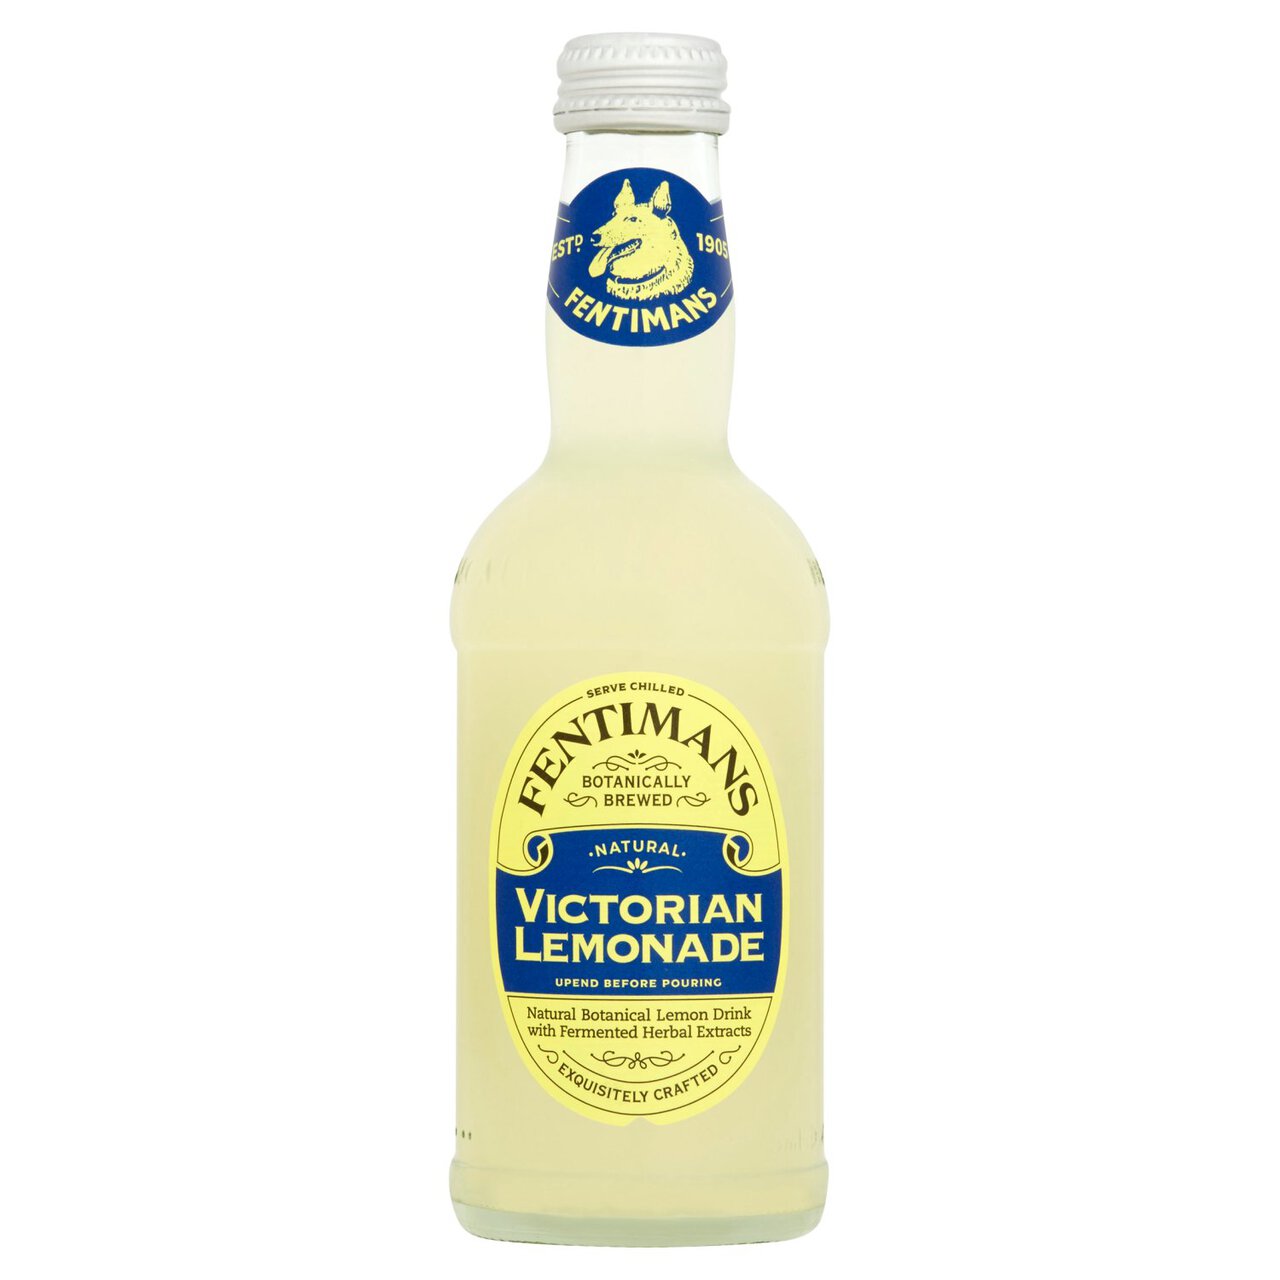 Fentimans Victorian Lemonade 275ml